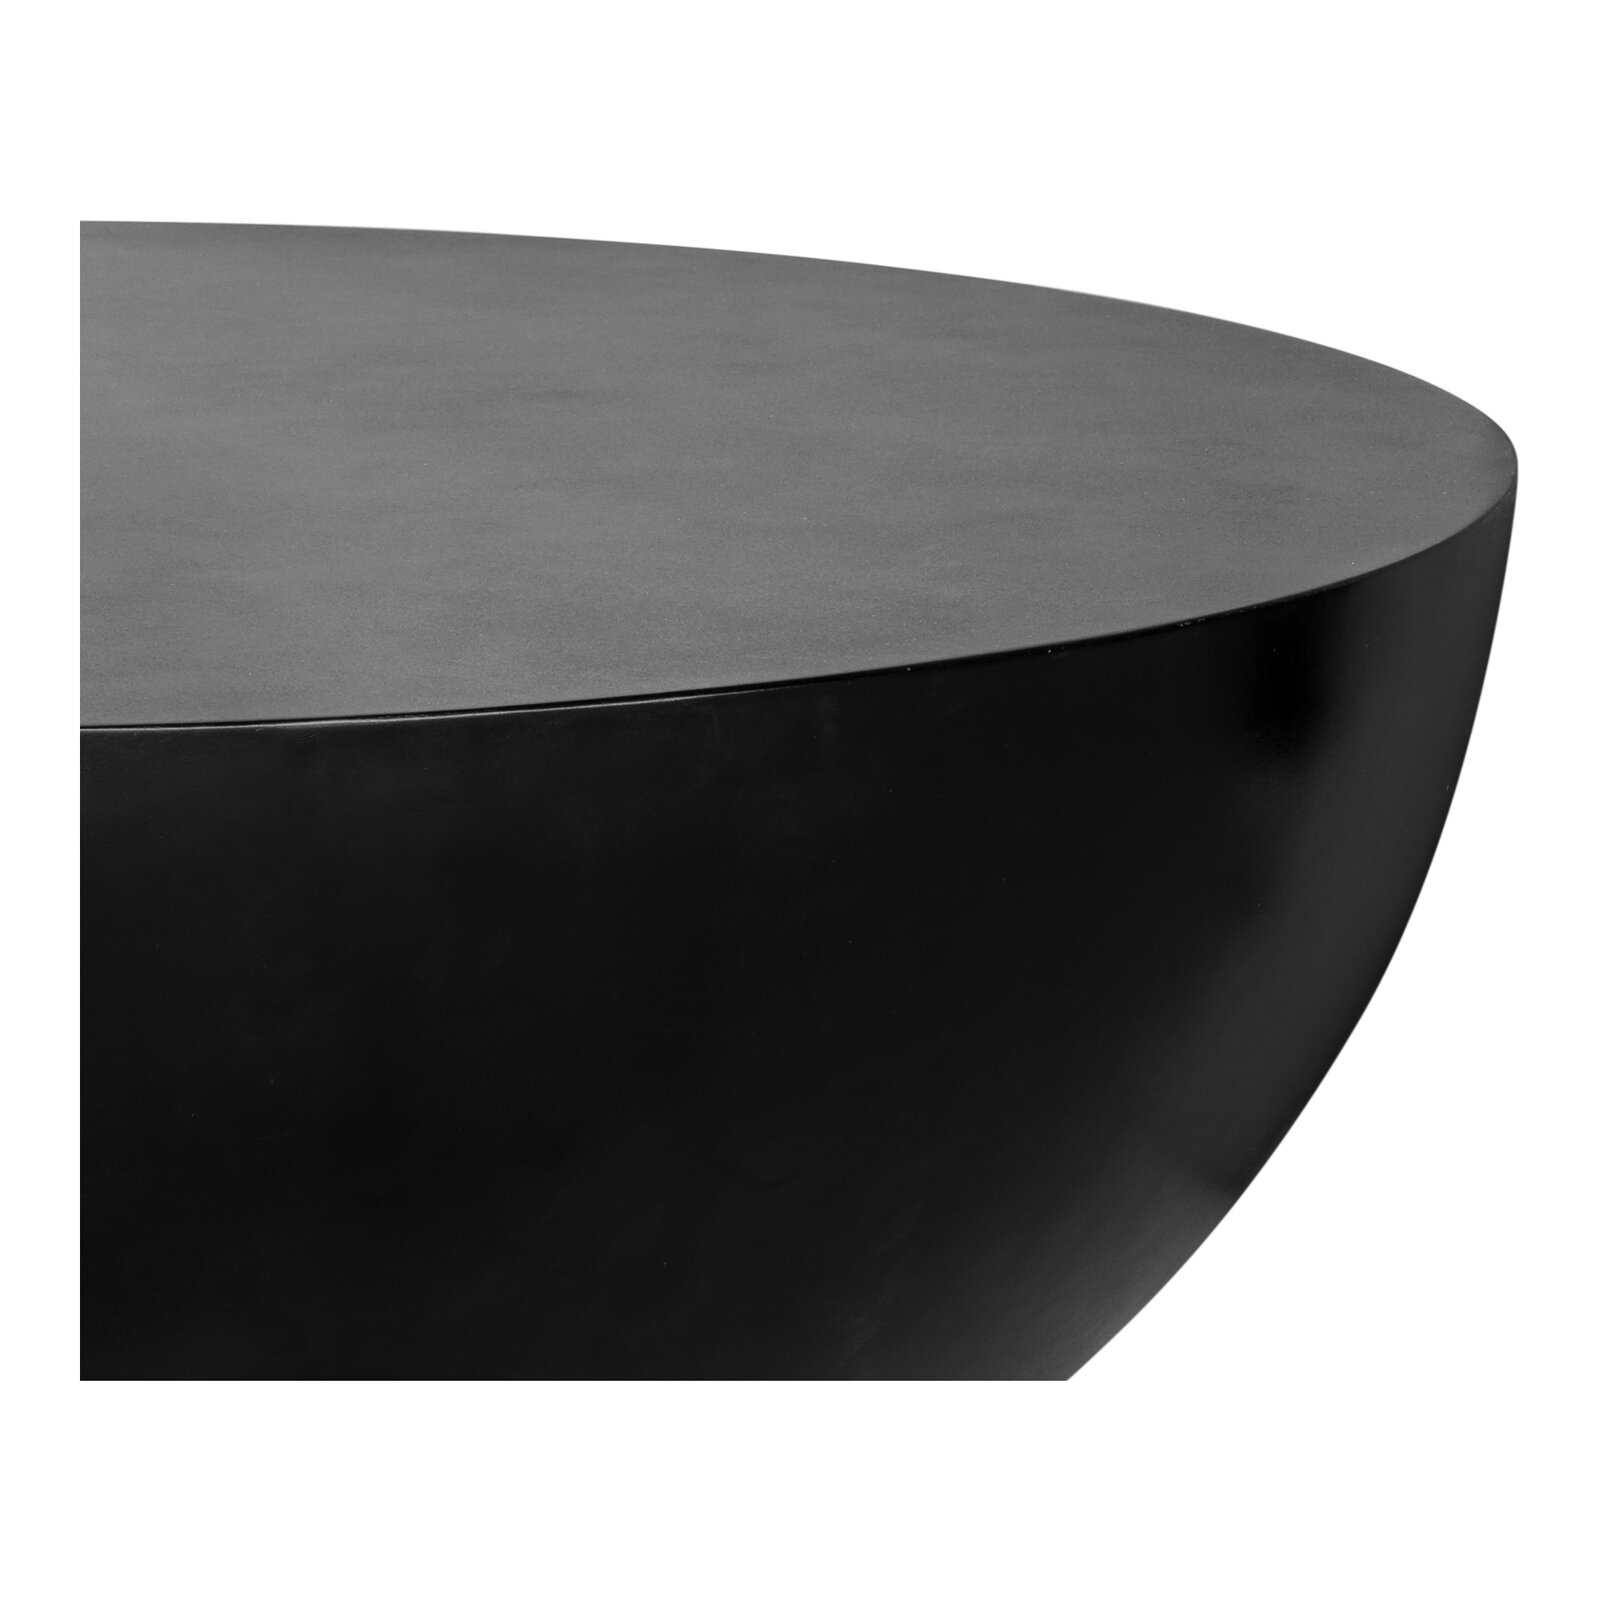 Brantley Concrete Drum End Table - Image 1